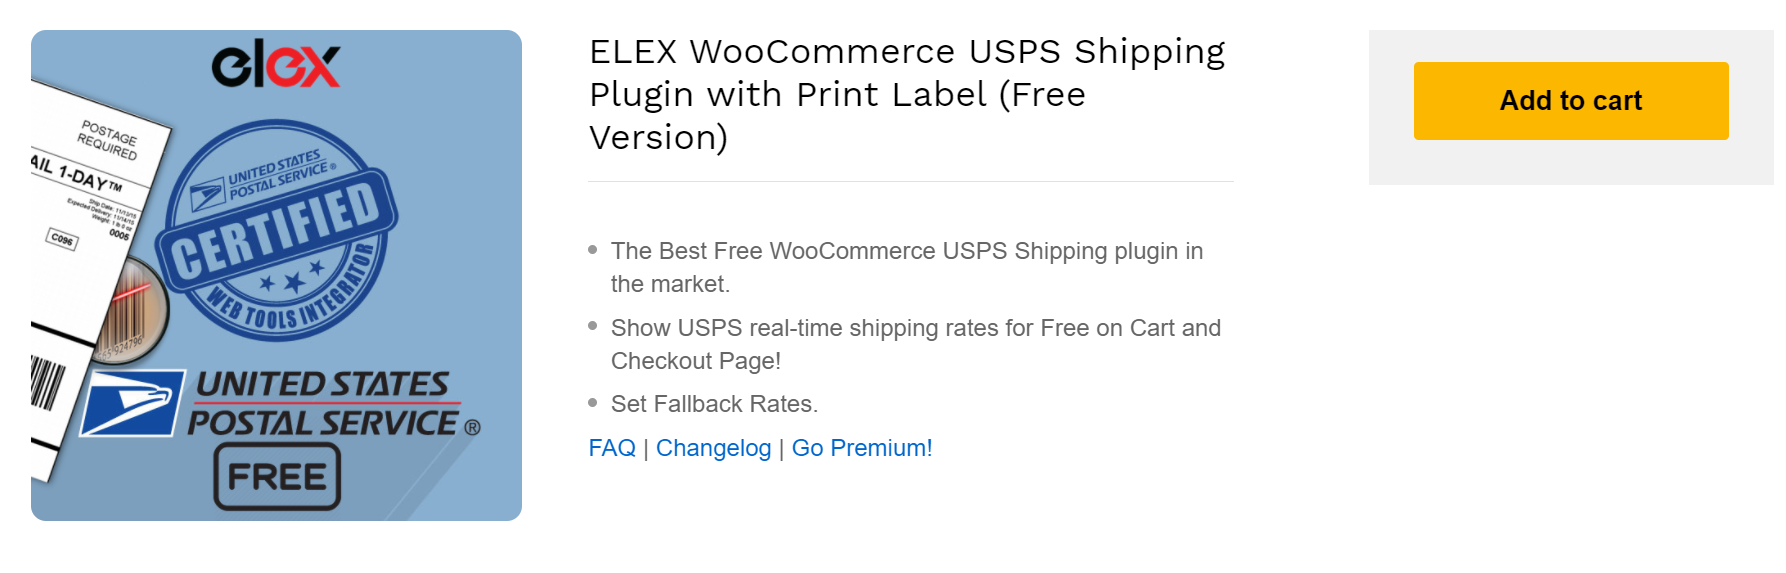 Free WooCommerce Shipping Calculator Plugins | ELEX WooCommerce USPS Shipping Plugin